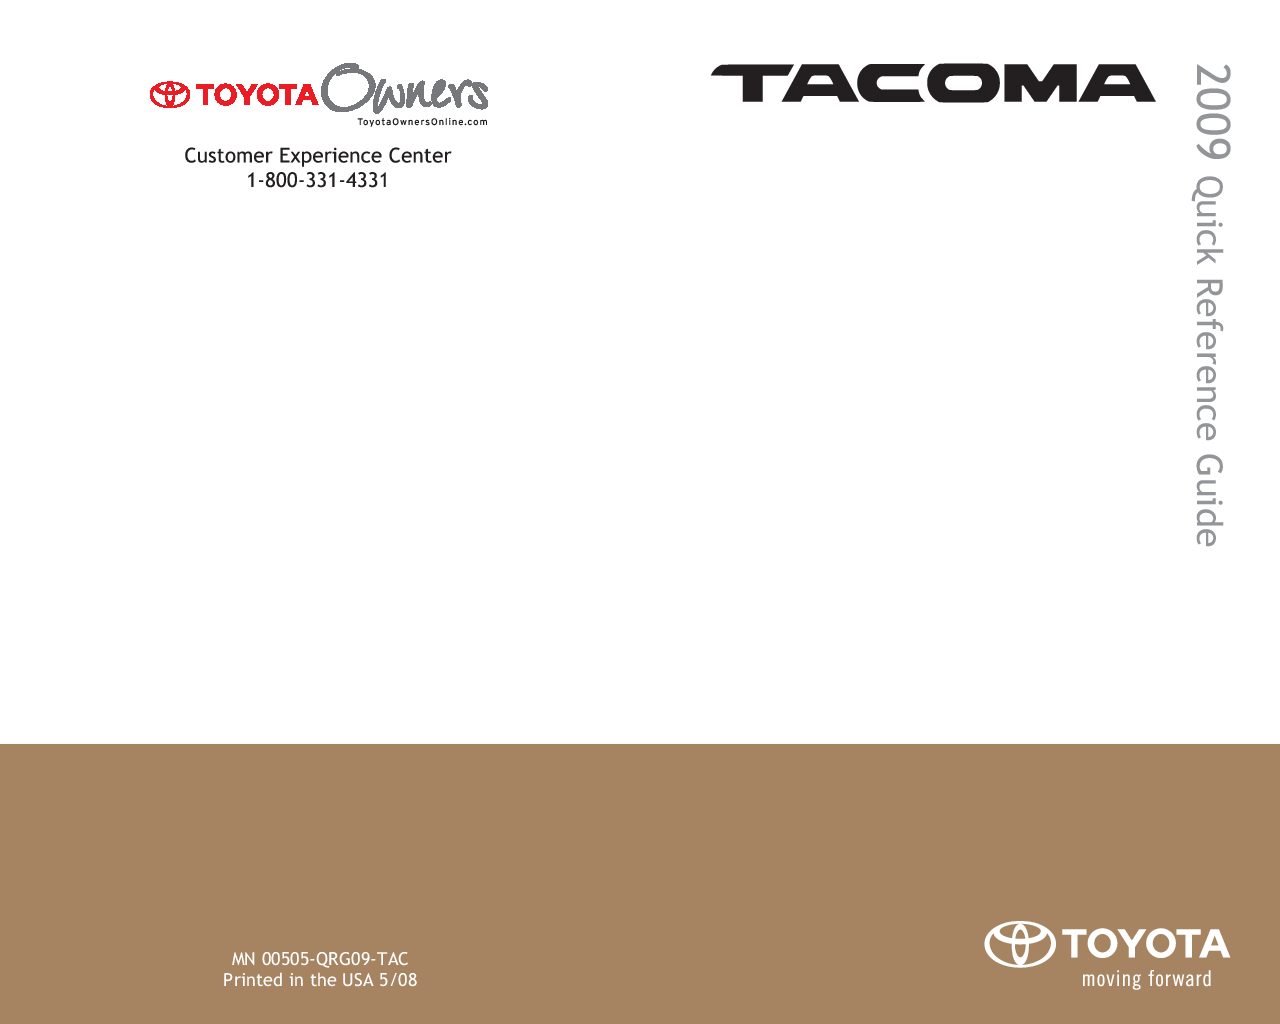 2009 Toyota Tacoma Image